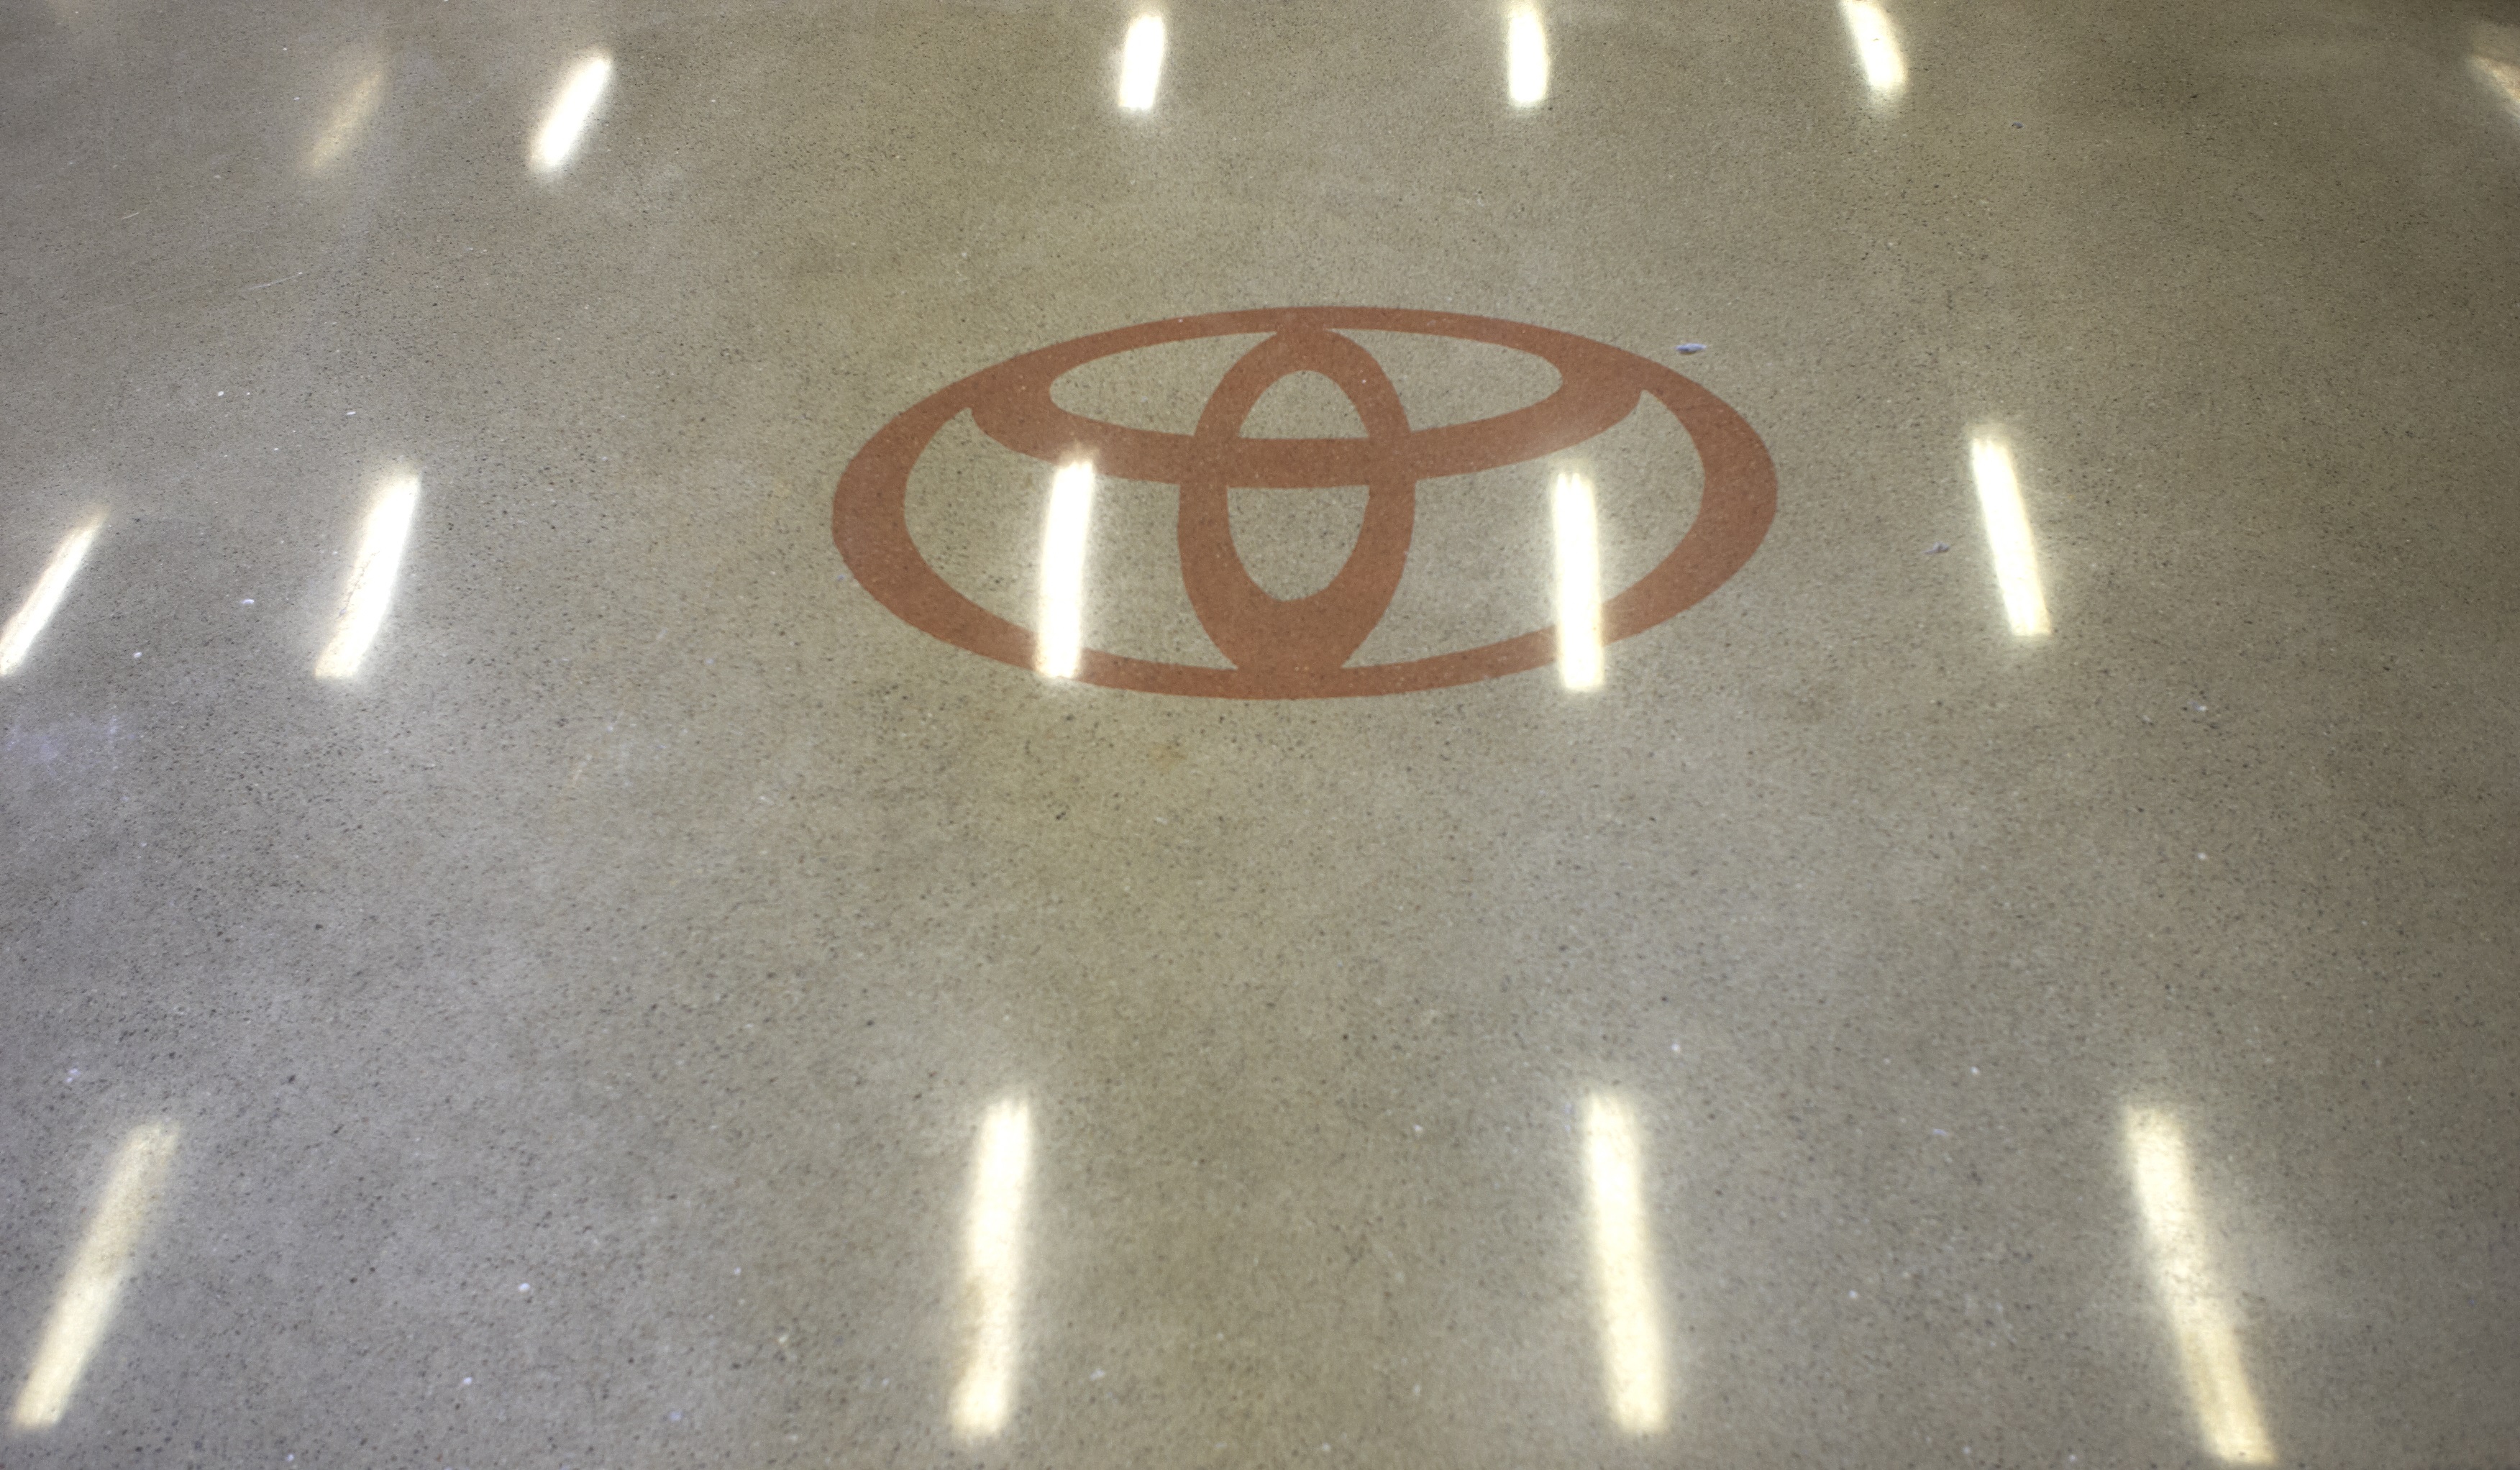 toyota logo on polished concrete floor